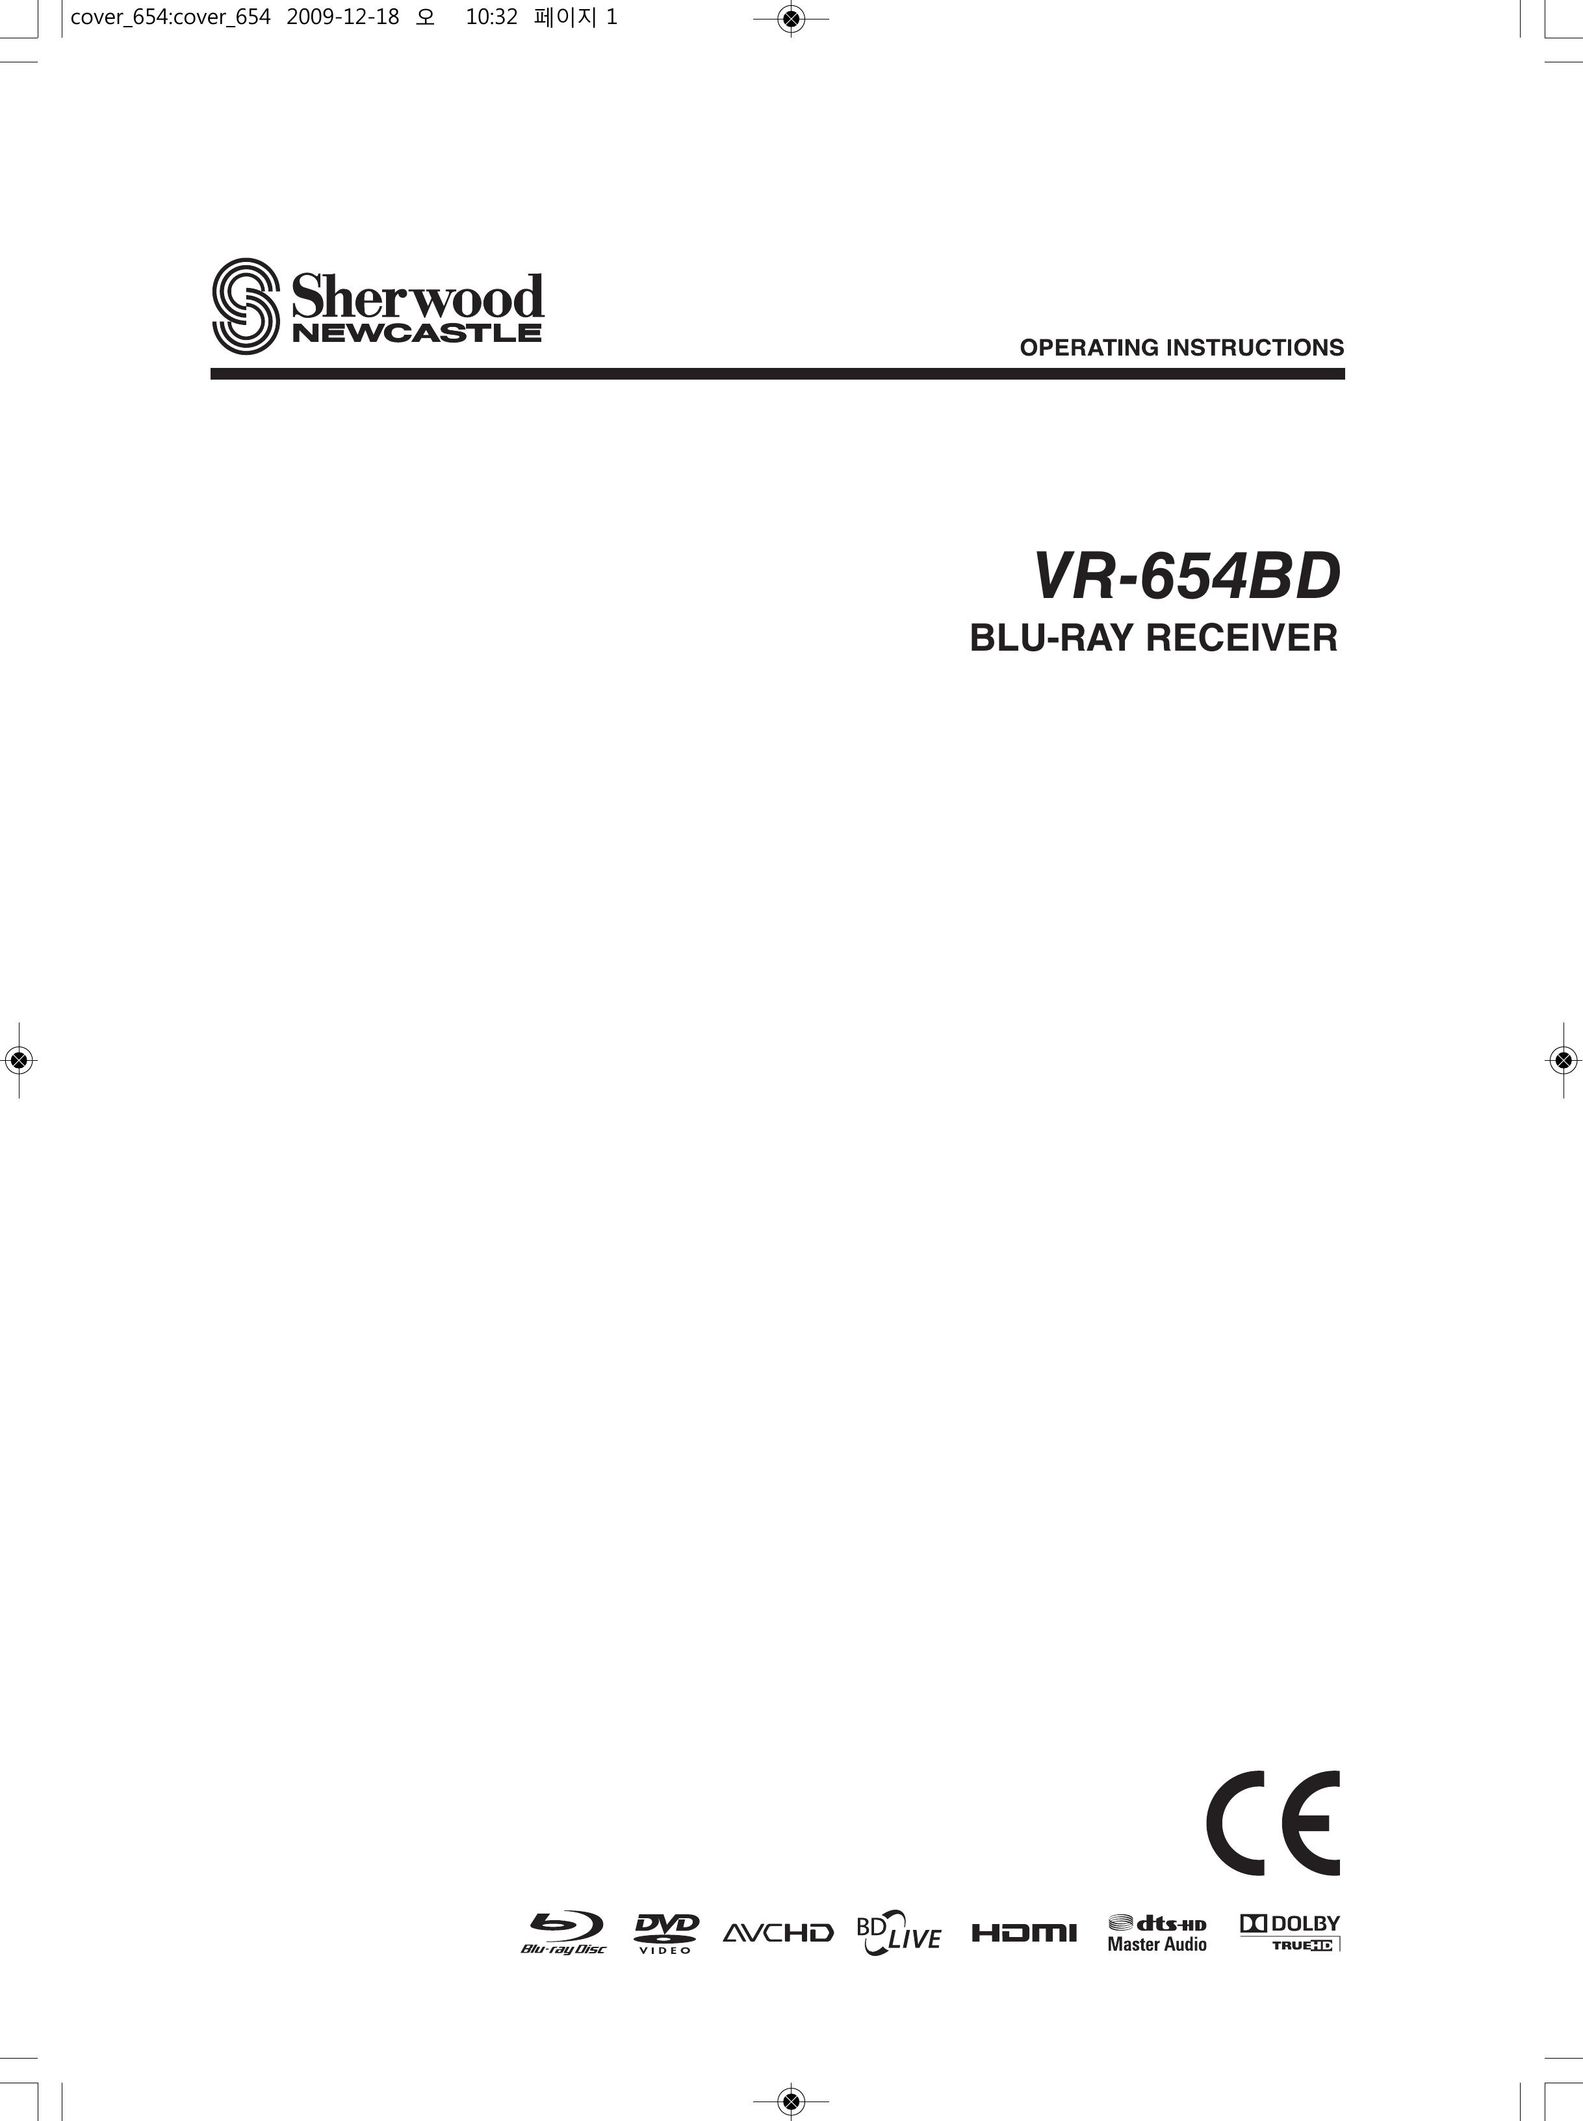 Sherwood VR-654BD Blu-ray Player User Manual